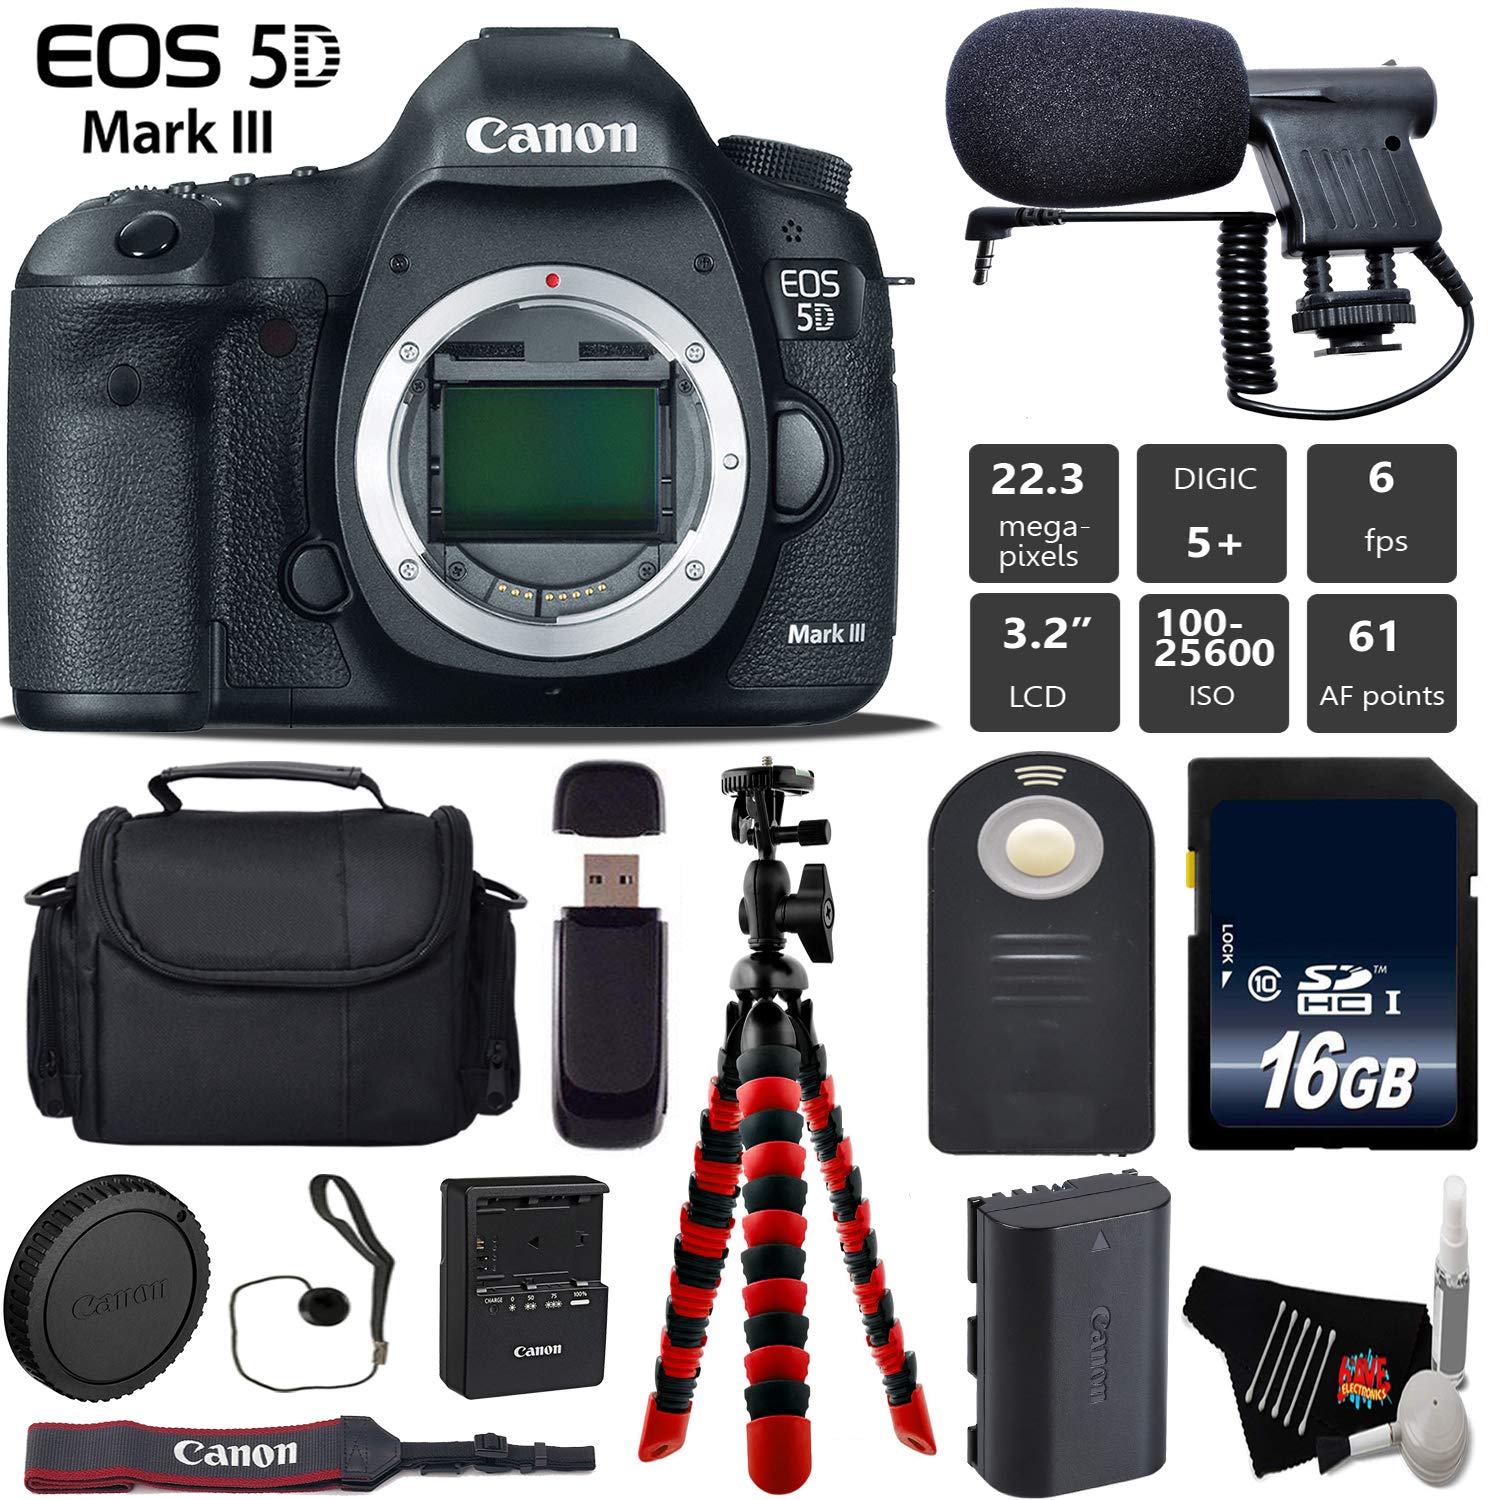 Canon EOS 5D Mark III DSLR Camera (Body Only) + Wireless Remote + Condenser Microphone + Case + Wrist Strap + Tripod Base Bundle